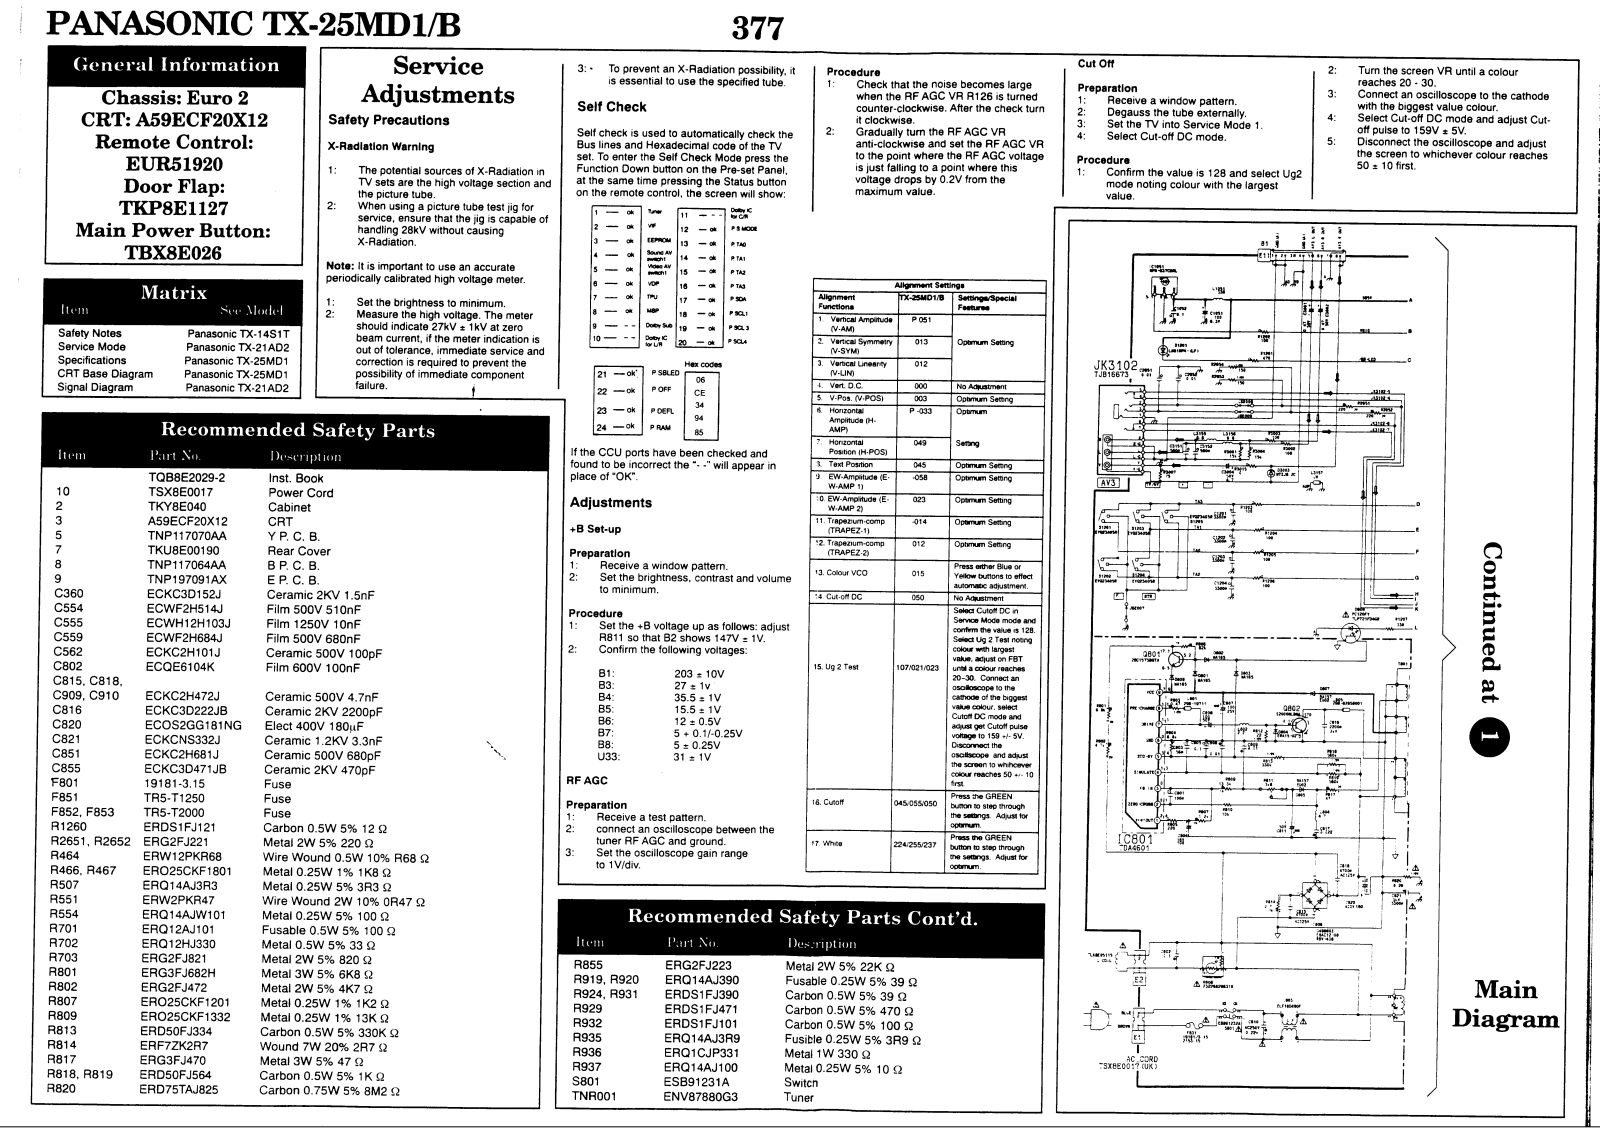 panasonic tx-25md1/b Service Adjustments